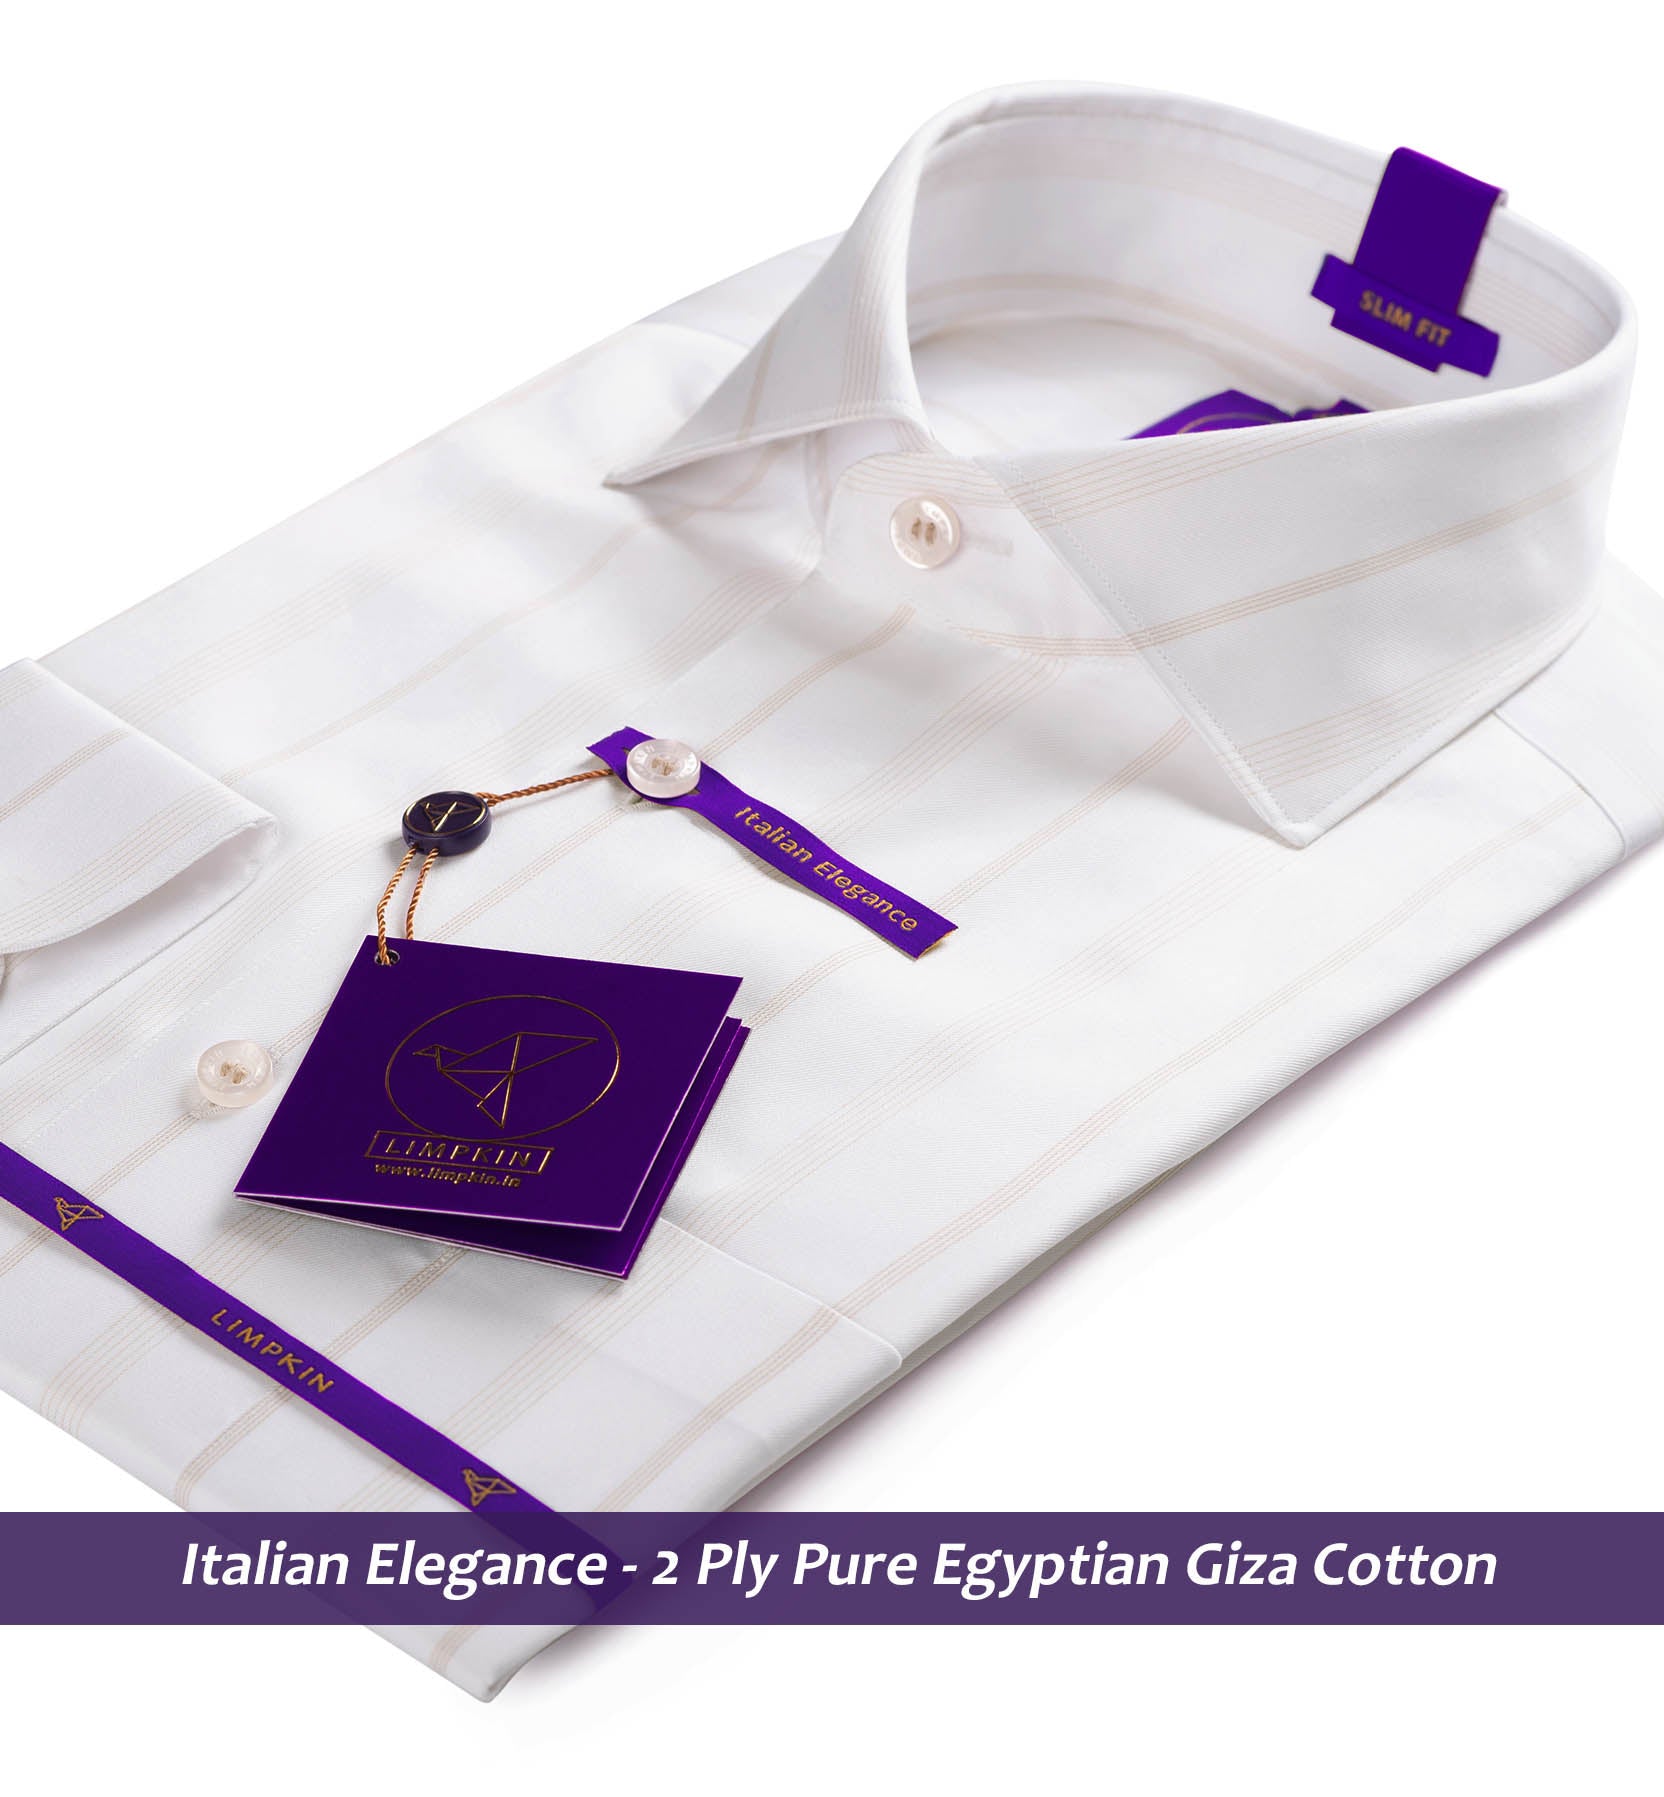 Striped Shirt - Tan & White | Formal Shirts for Men - Limpkin